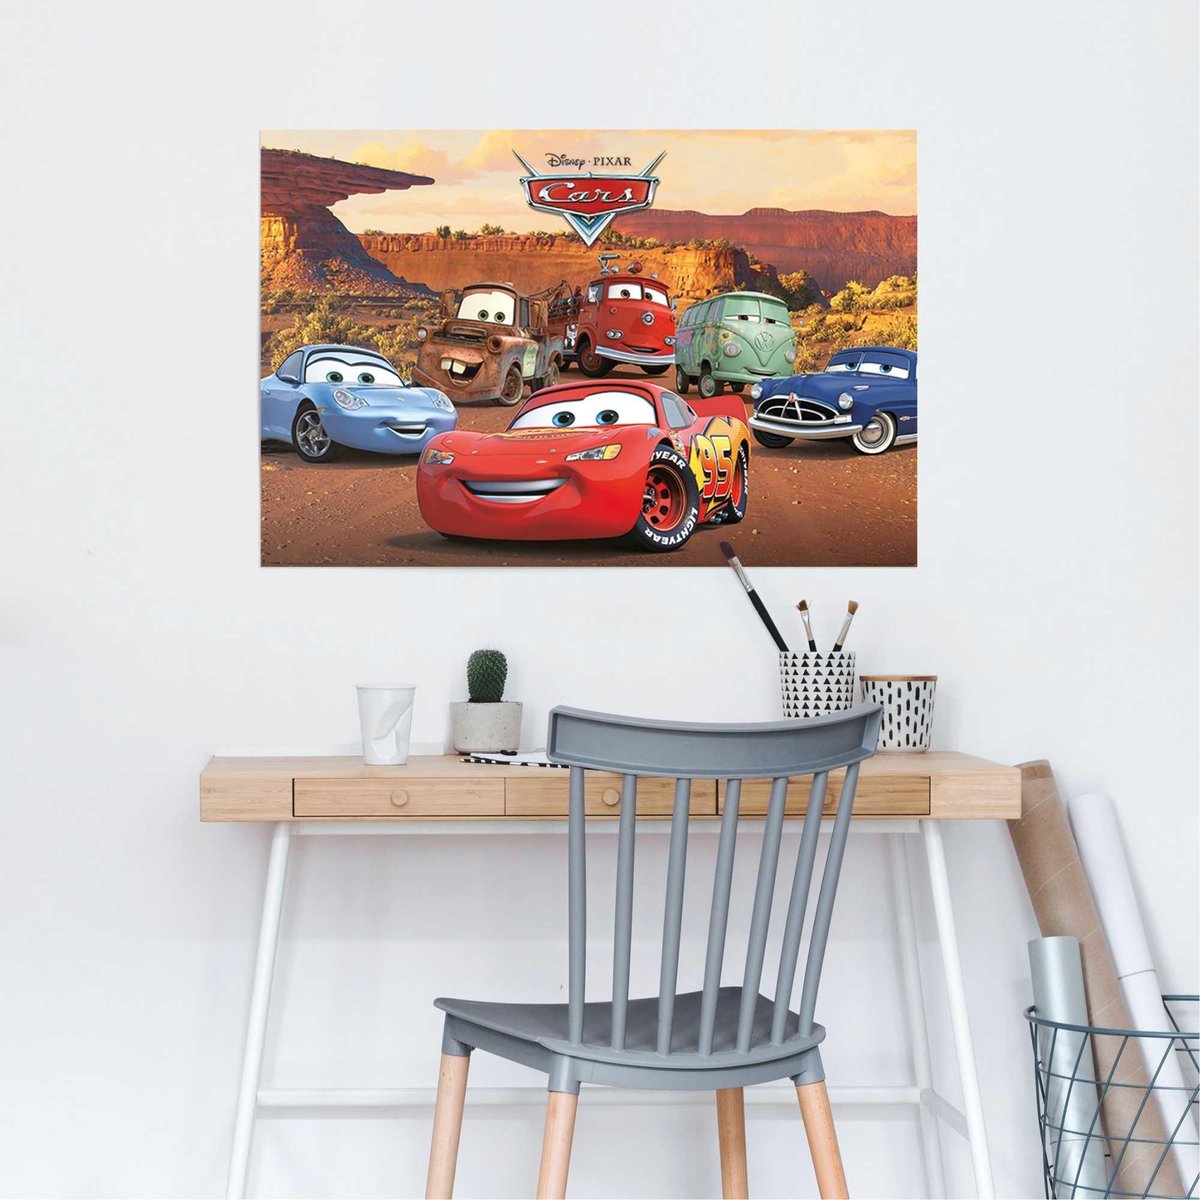 Groet Optimisme Lyrisch Poster Film & TV Disney Cars figuren 61x91,5 cm - Reinders | bol.com